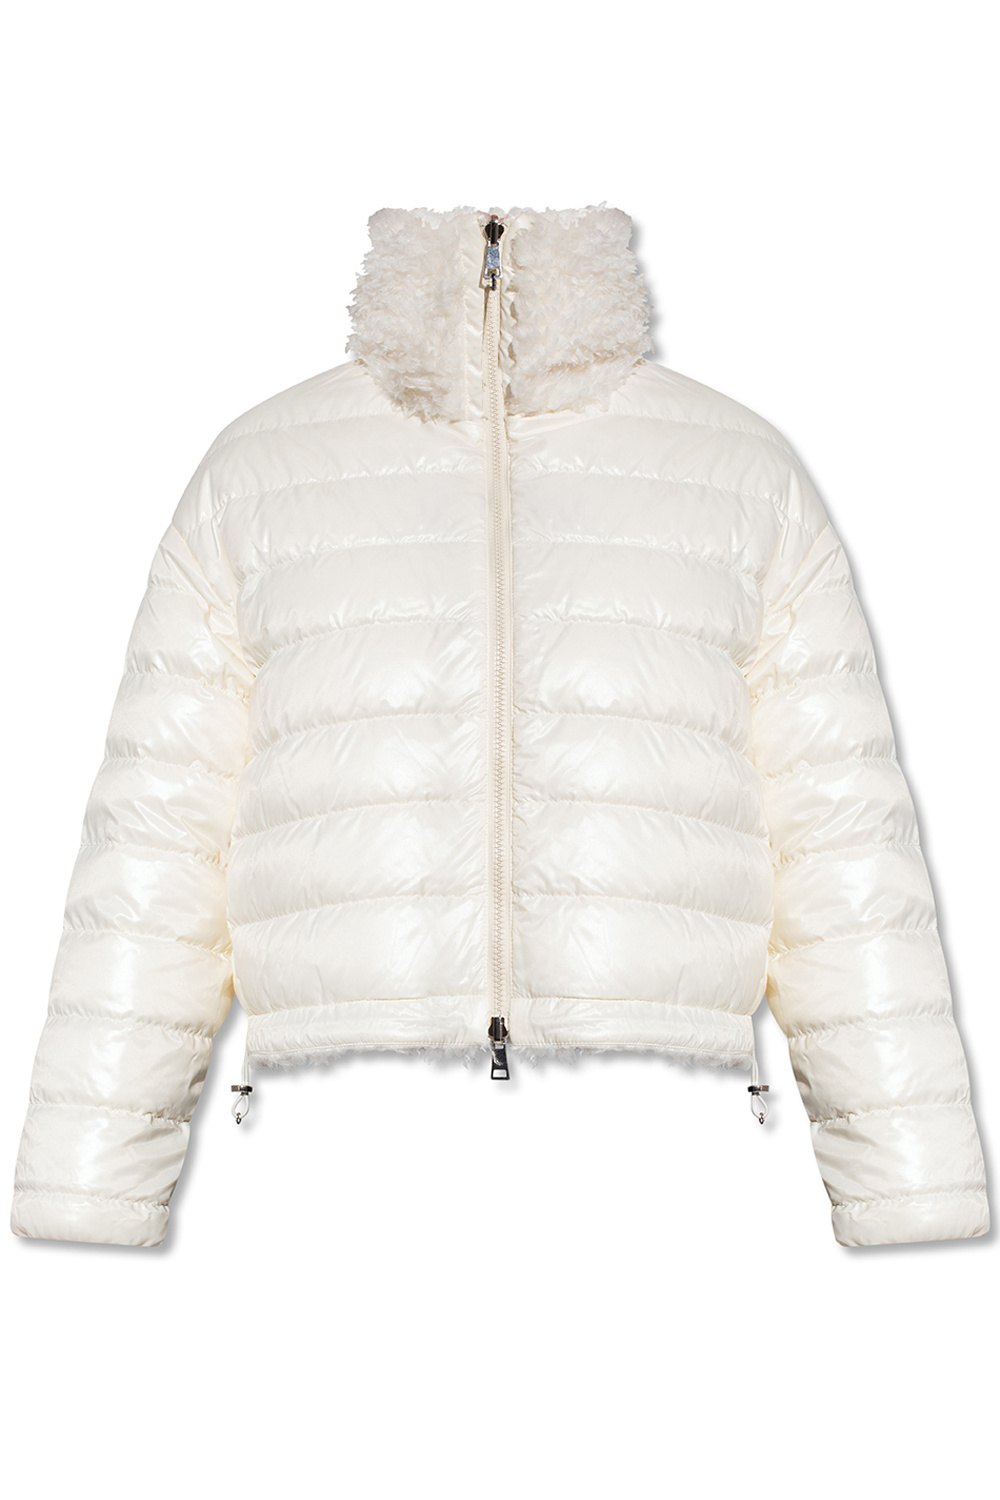 LOUIS VUITTON Reversible Pinstripe Nylon Hooded Jacket White. Size 42